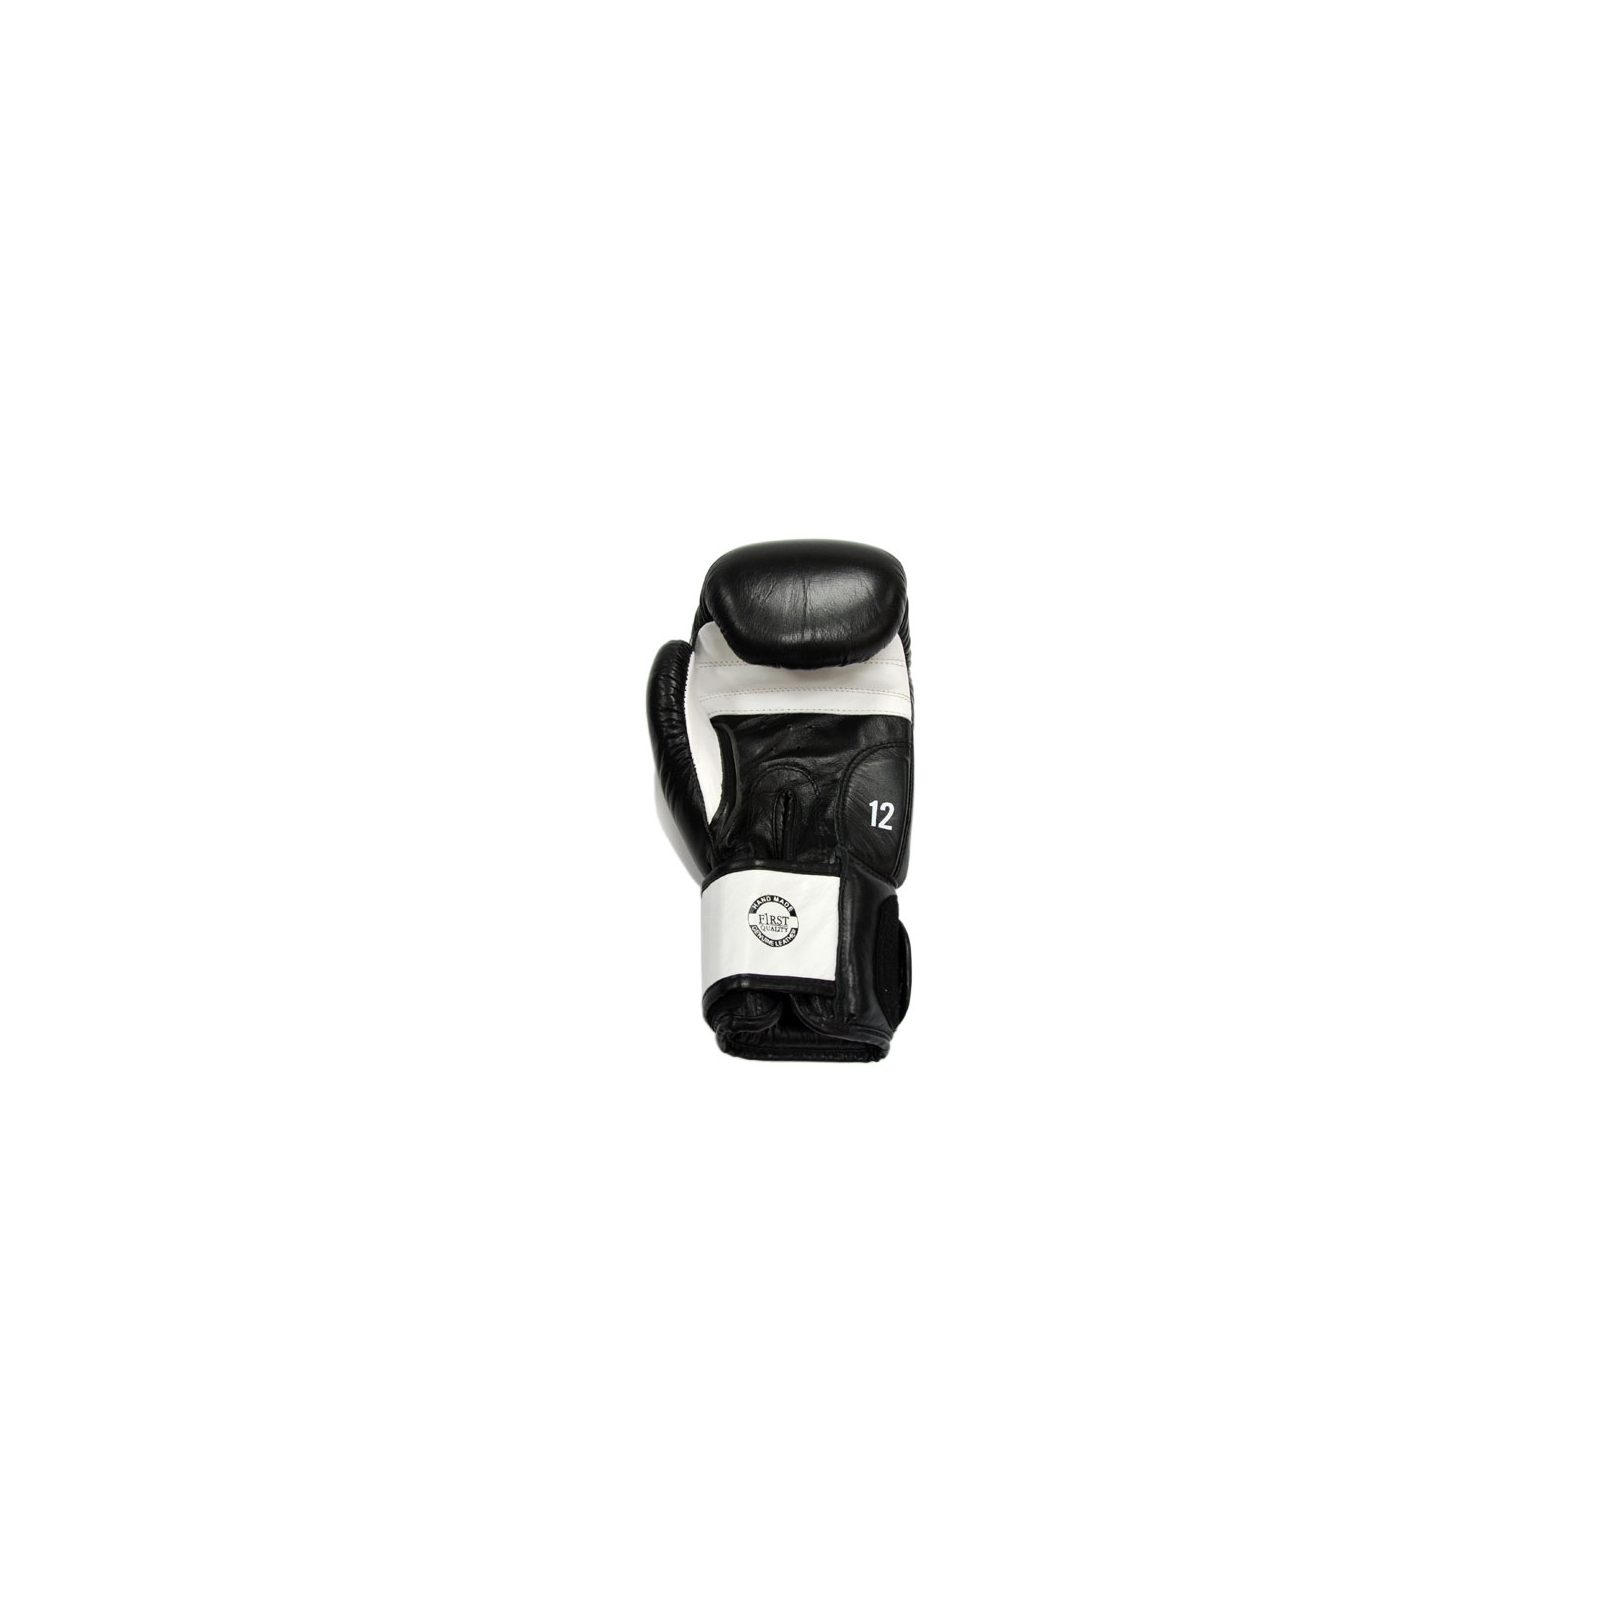 Боксерские перчатки Thor Sparring Шкіра 10oz Чорно-білі (558(Leather) BLK/WH 10 oz.) изображение 3